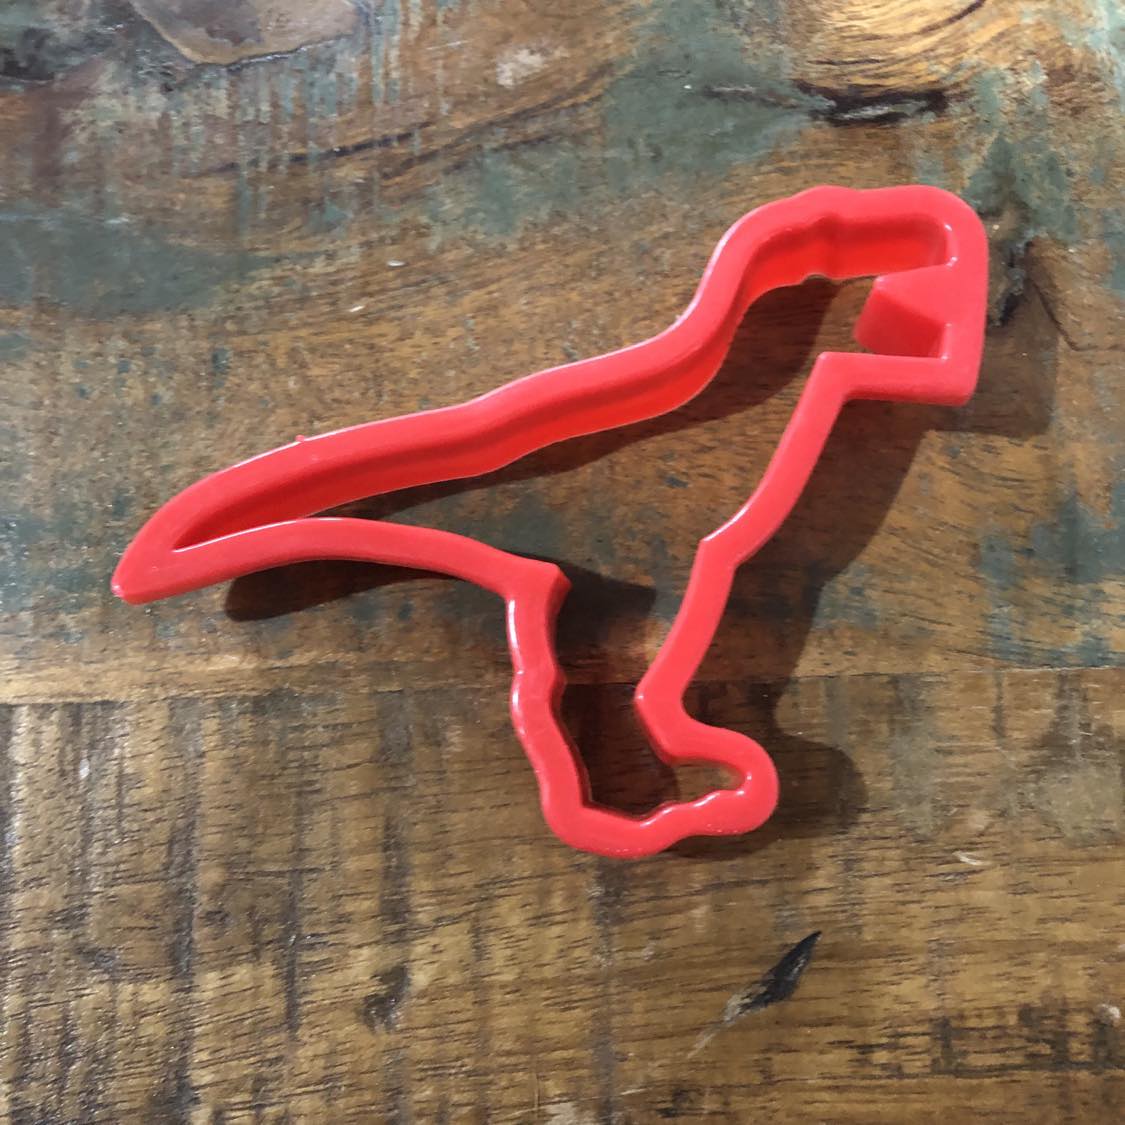 Raptor Dinosaur Quality plastic cookie cutter by Wilton